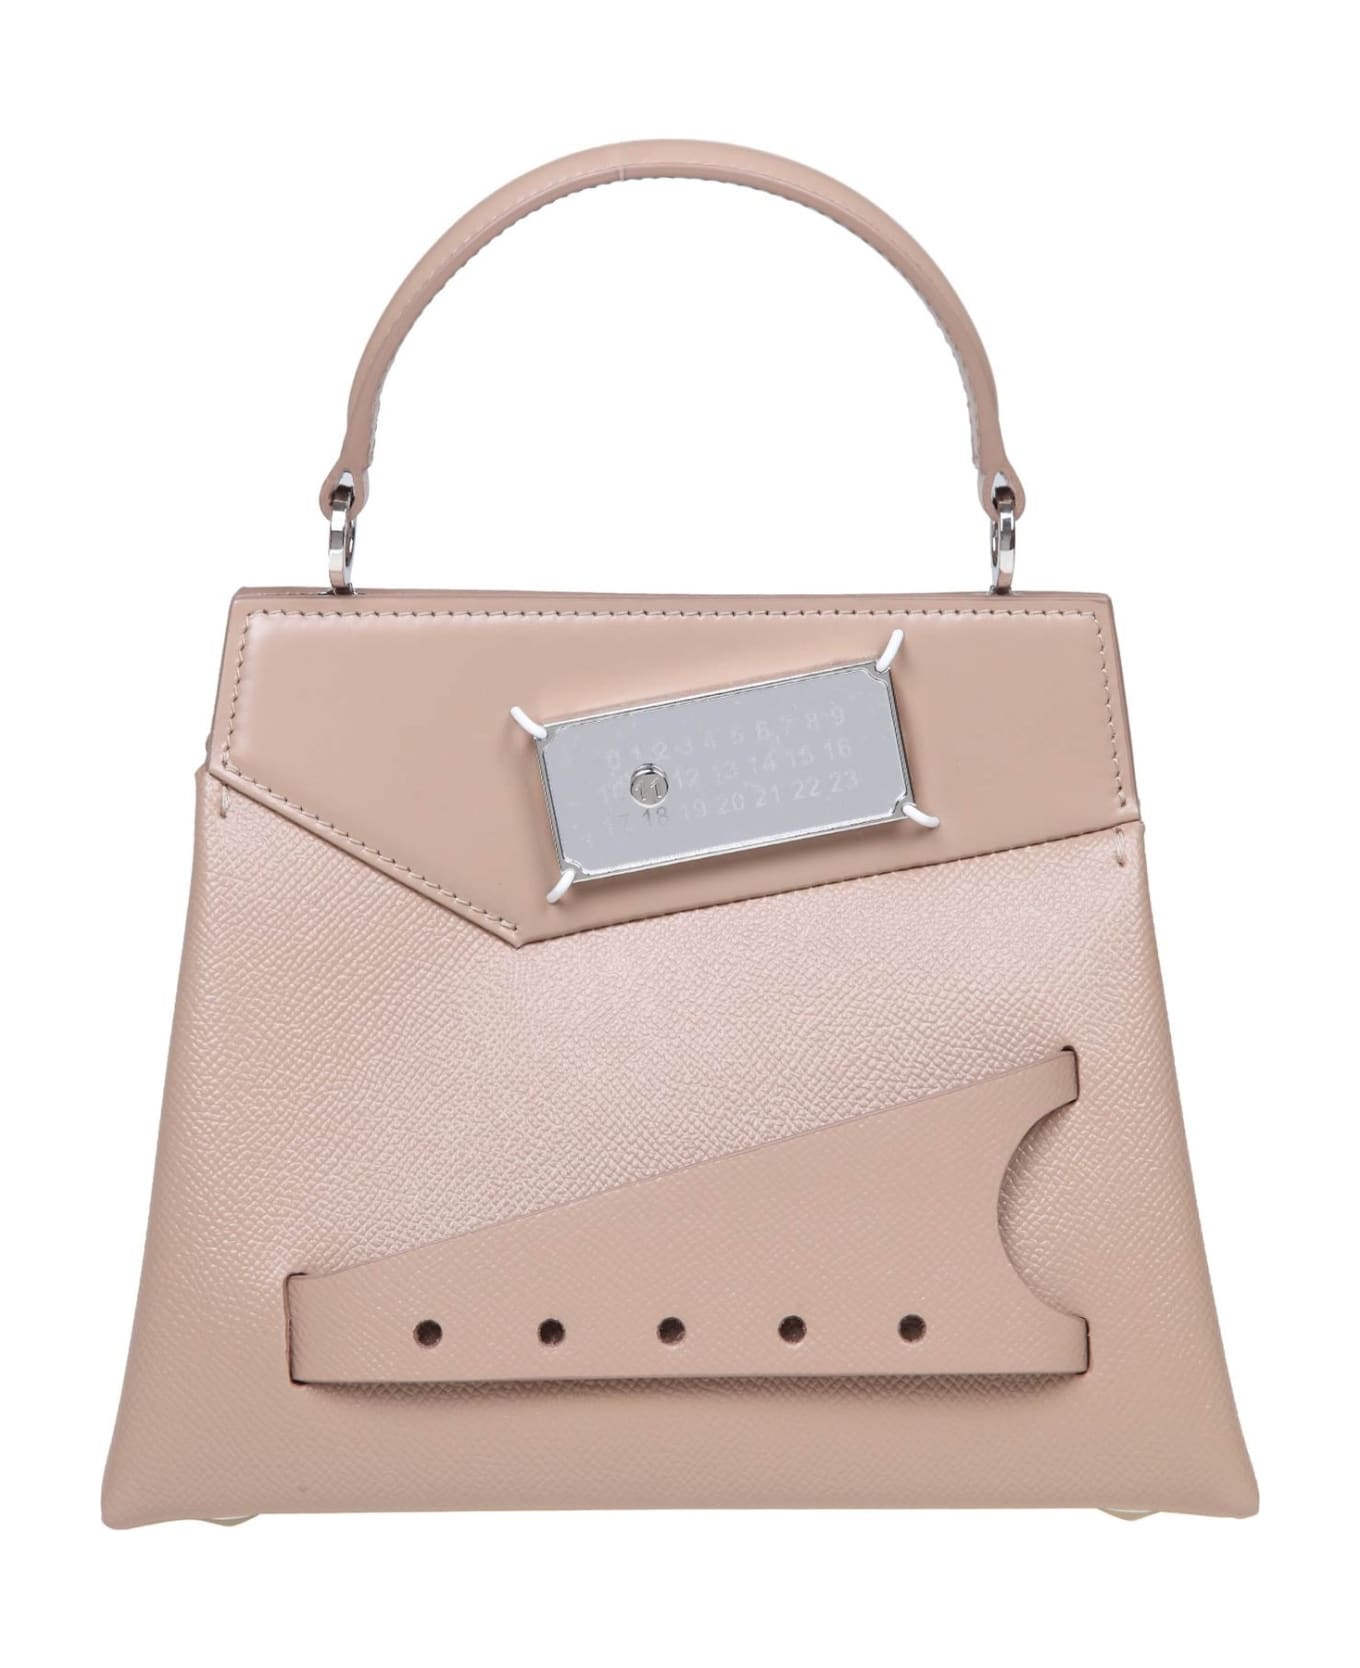 Maison Margiela Small Snatched Handbag In Beige Leather - BEIGE